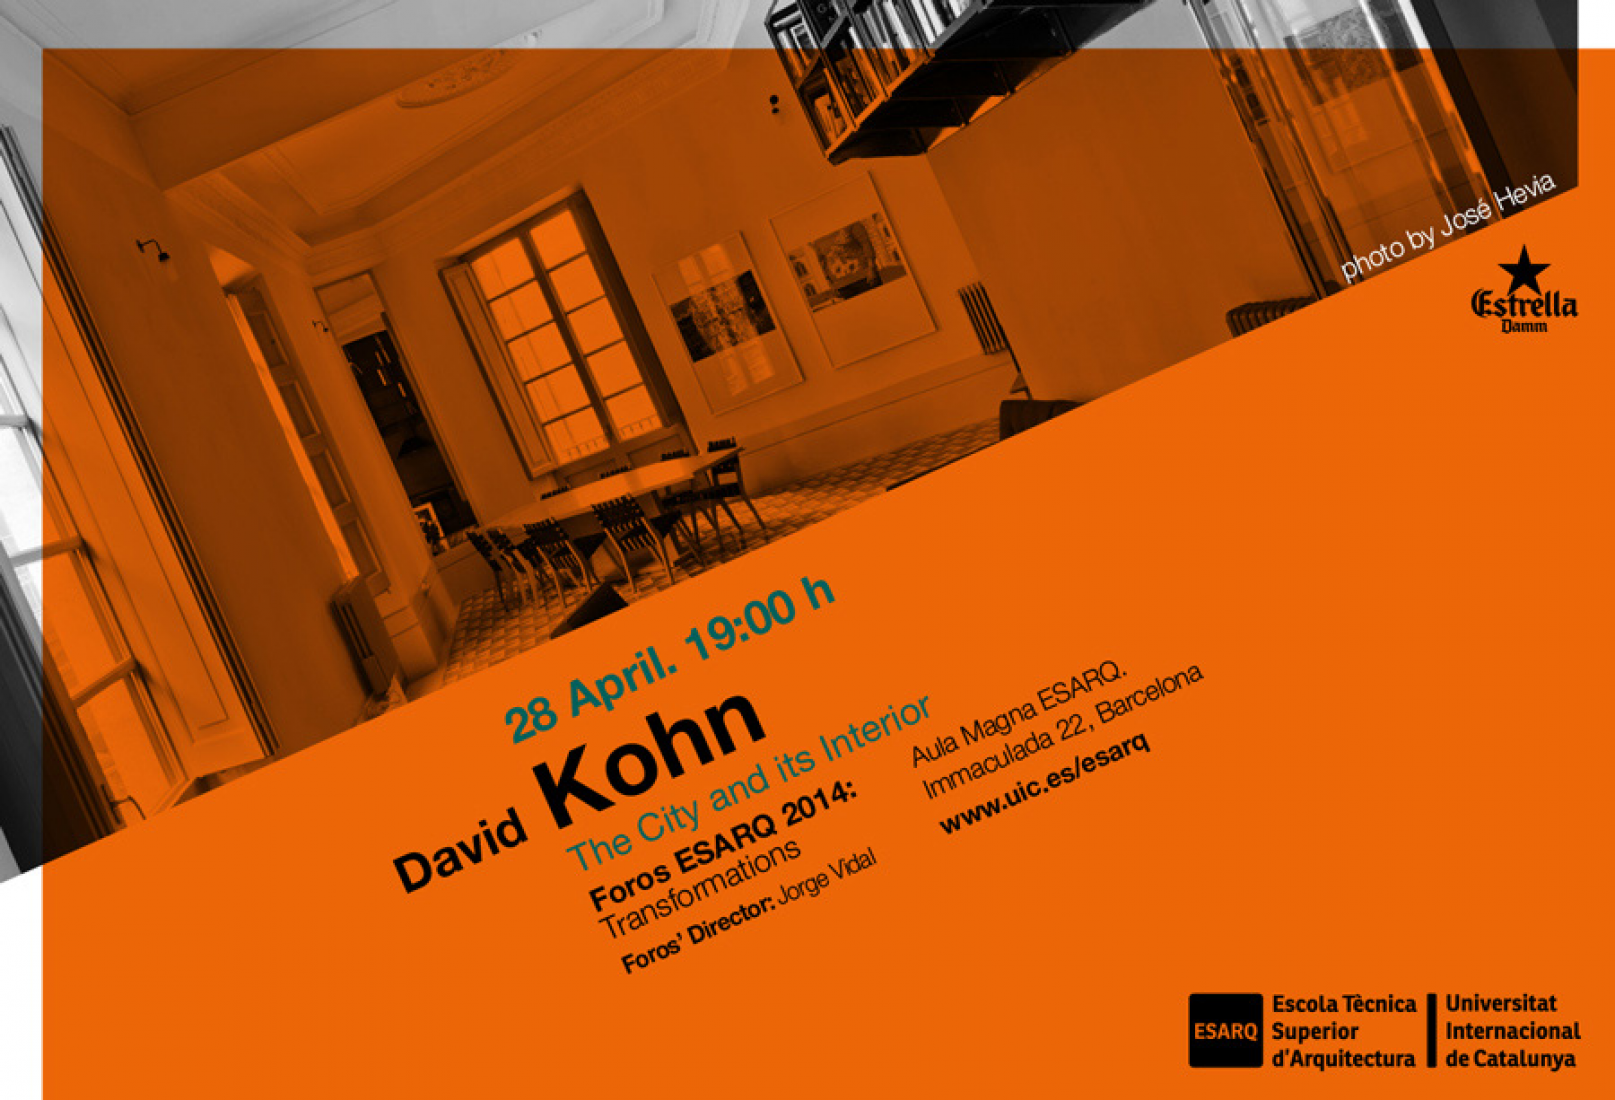 David Kohn. Lecture Poster. “Foros Esarq 2014: Transformations”.